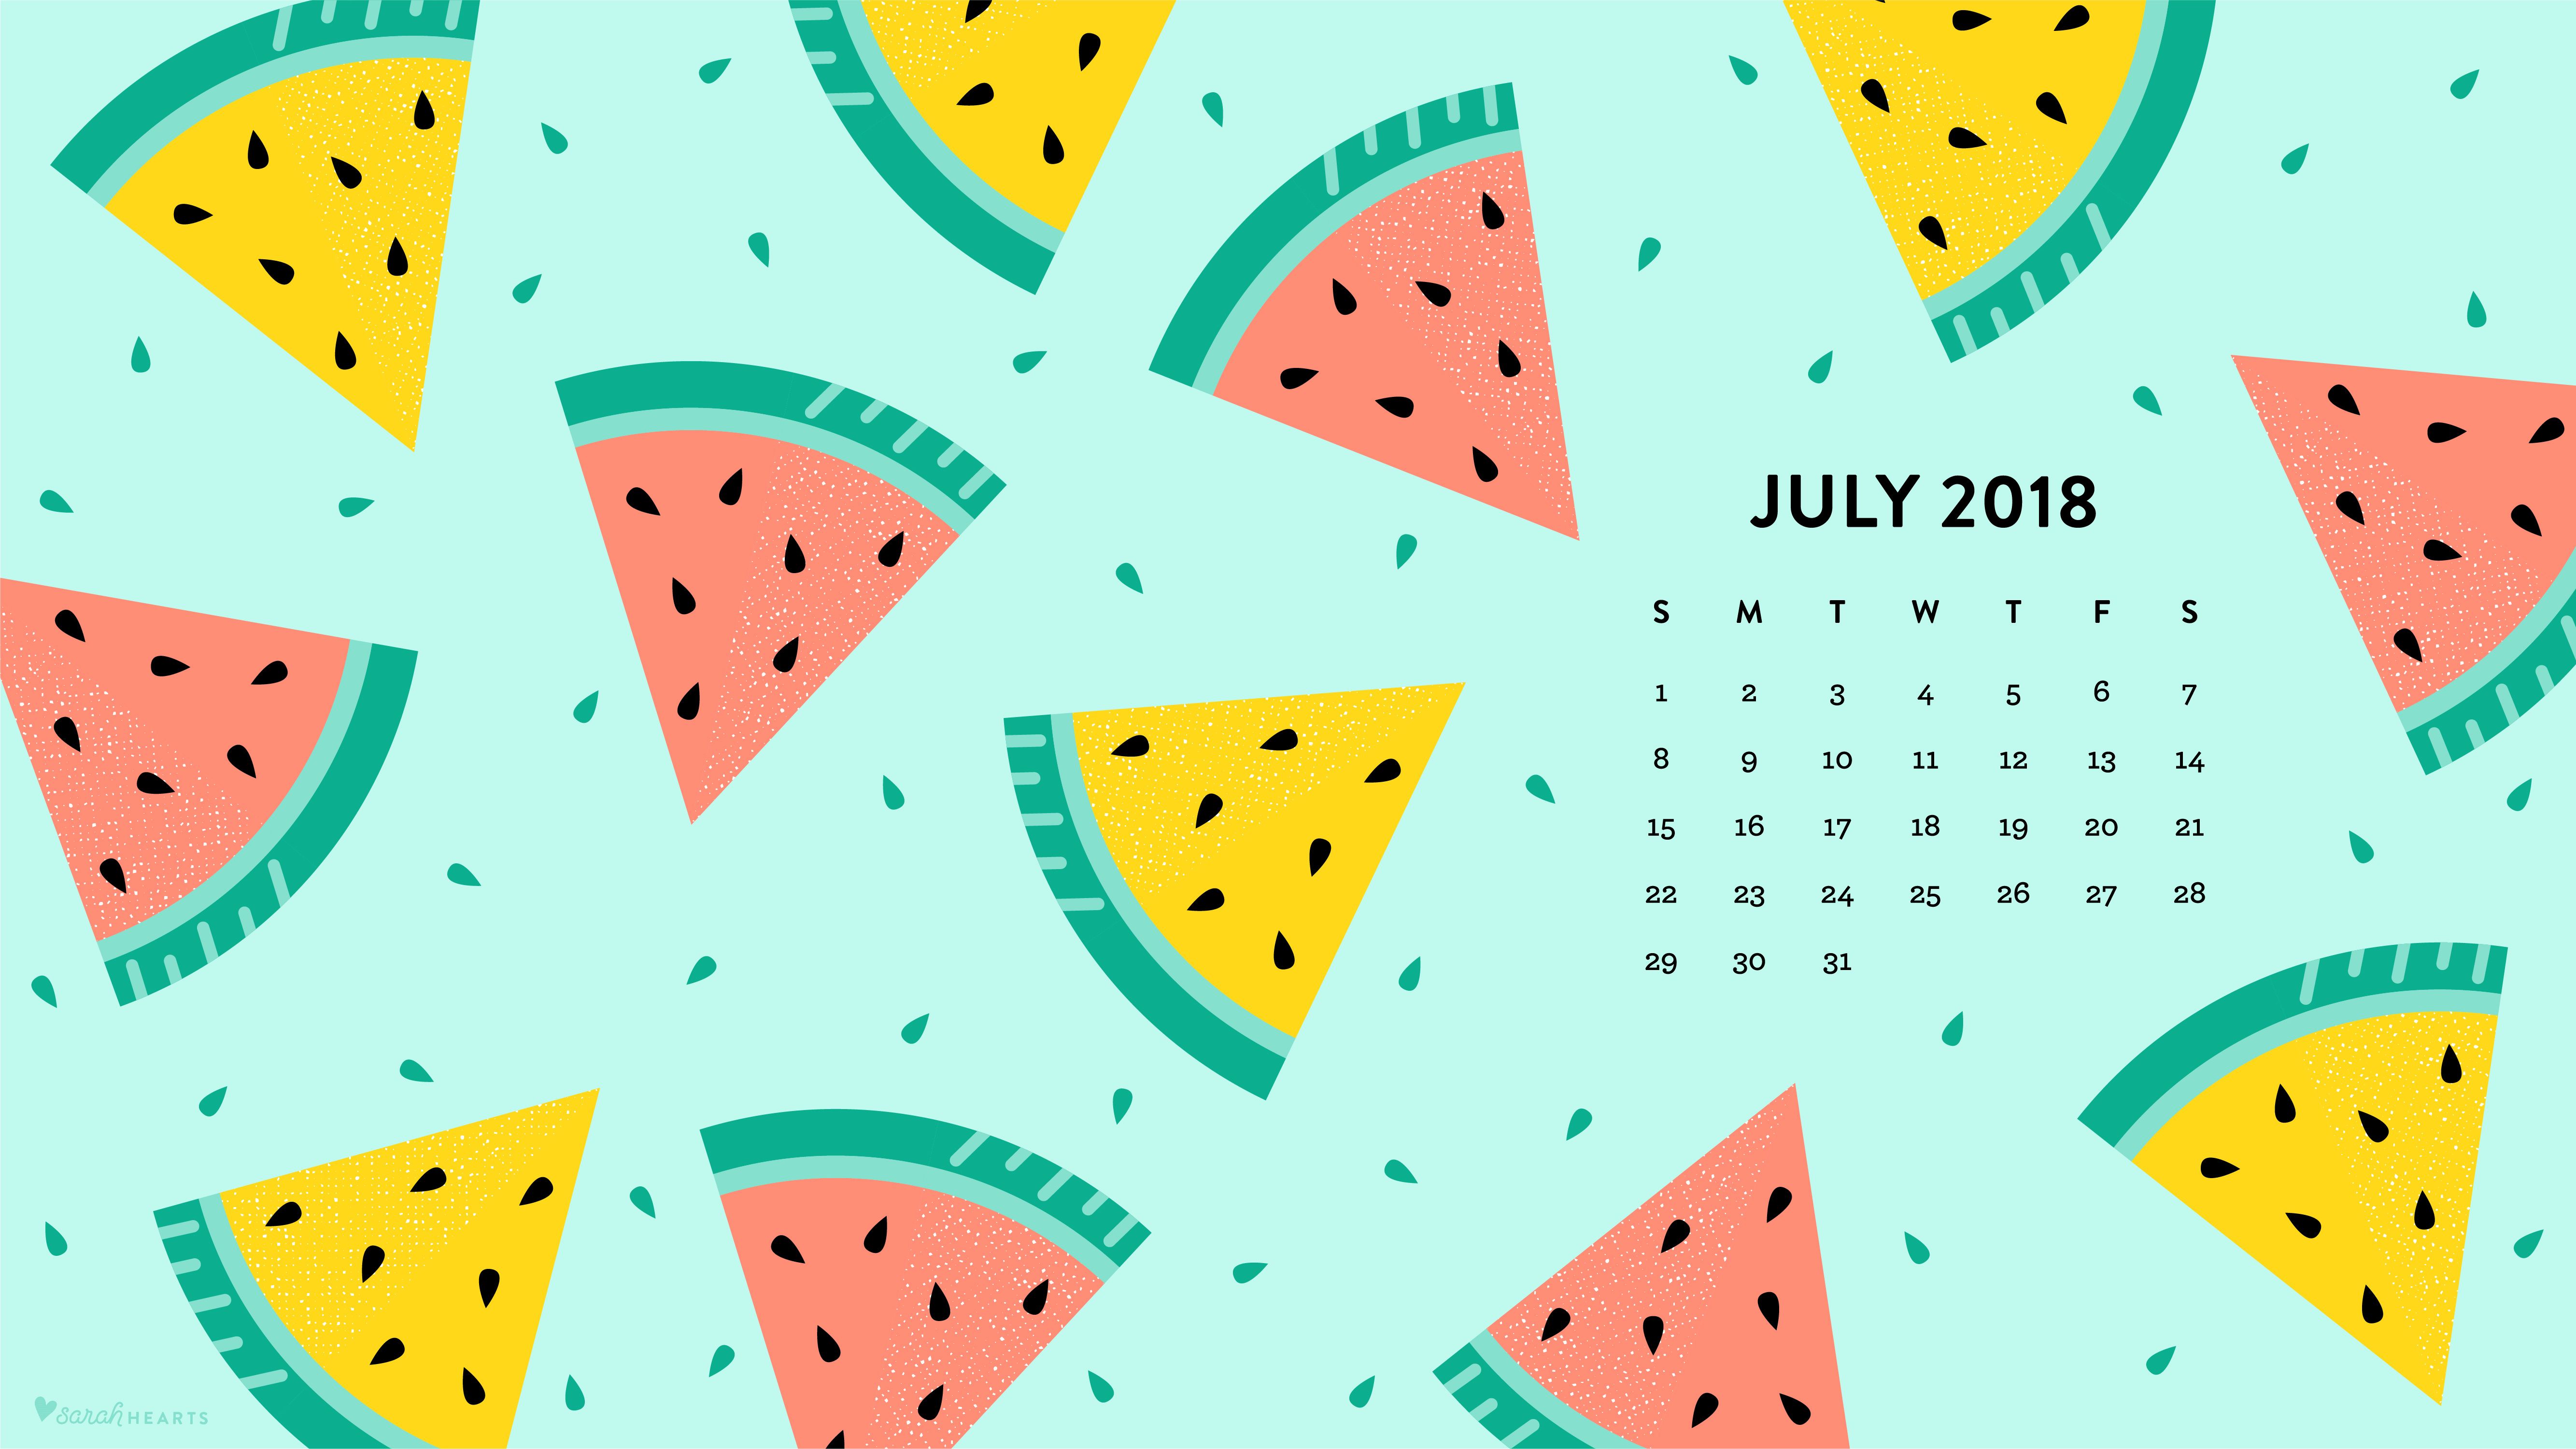 July 2018 Watermelon Calendar Wallpaper